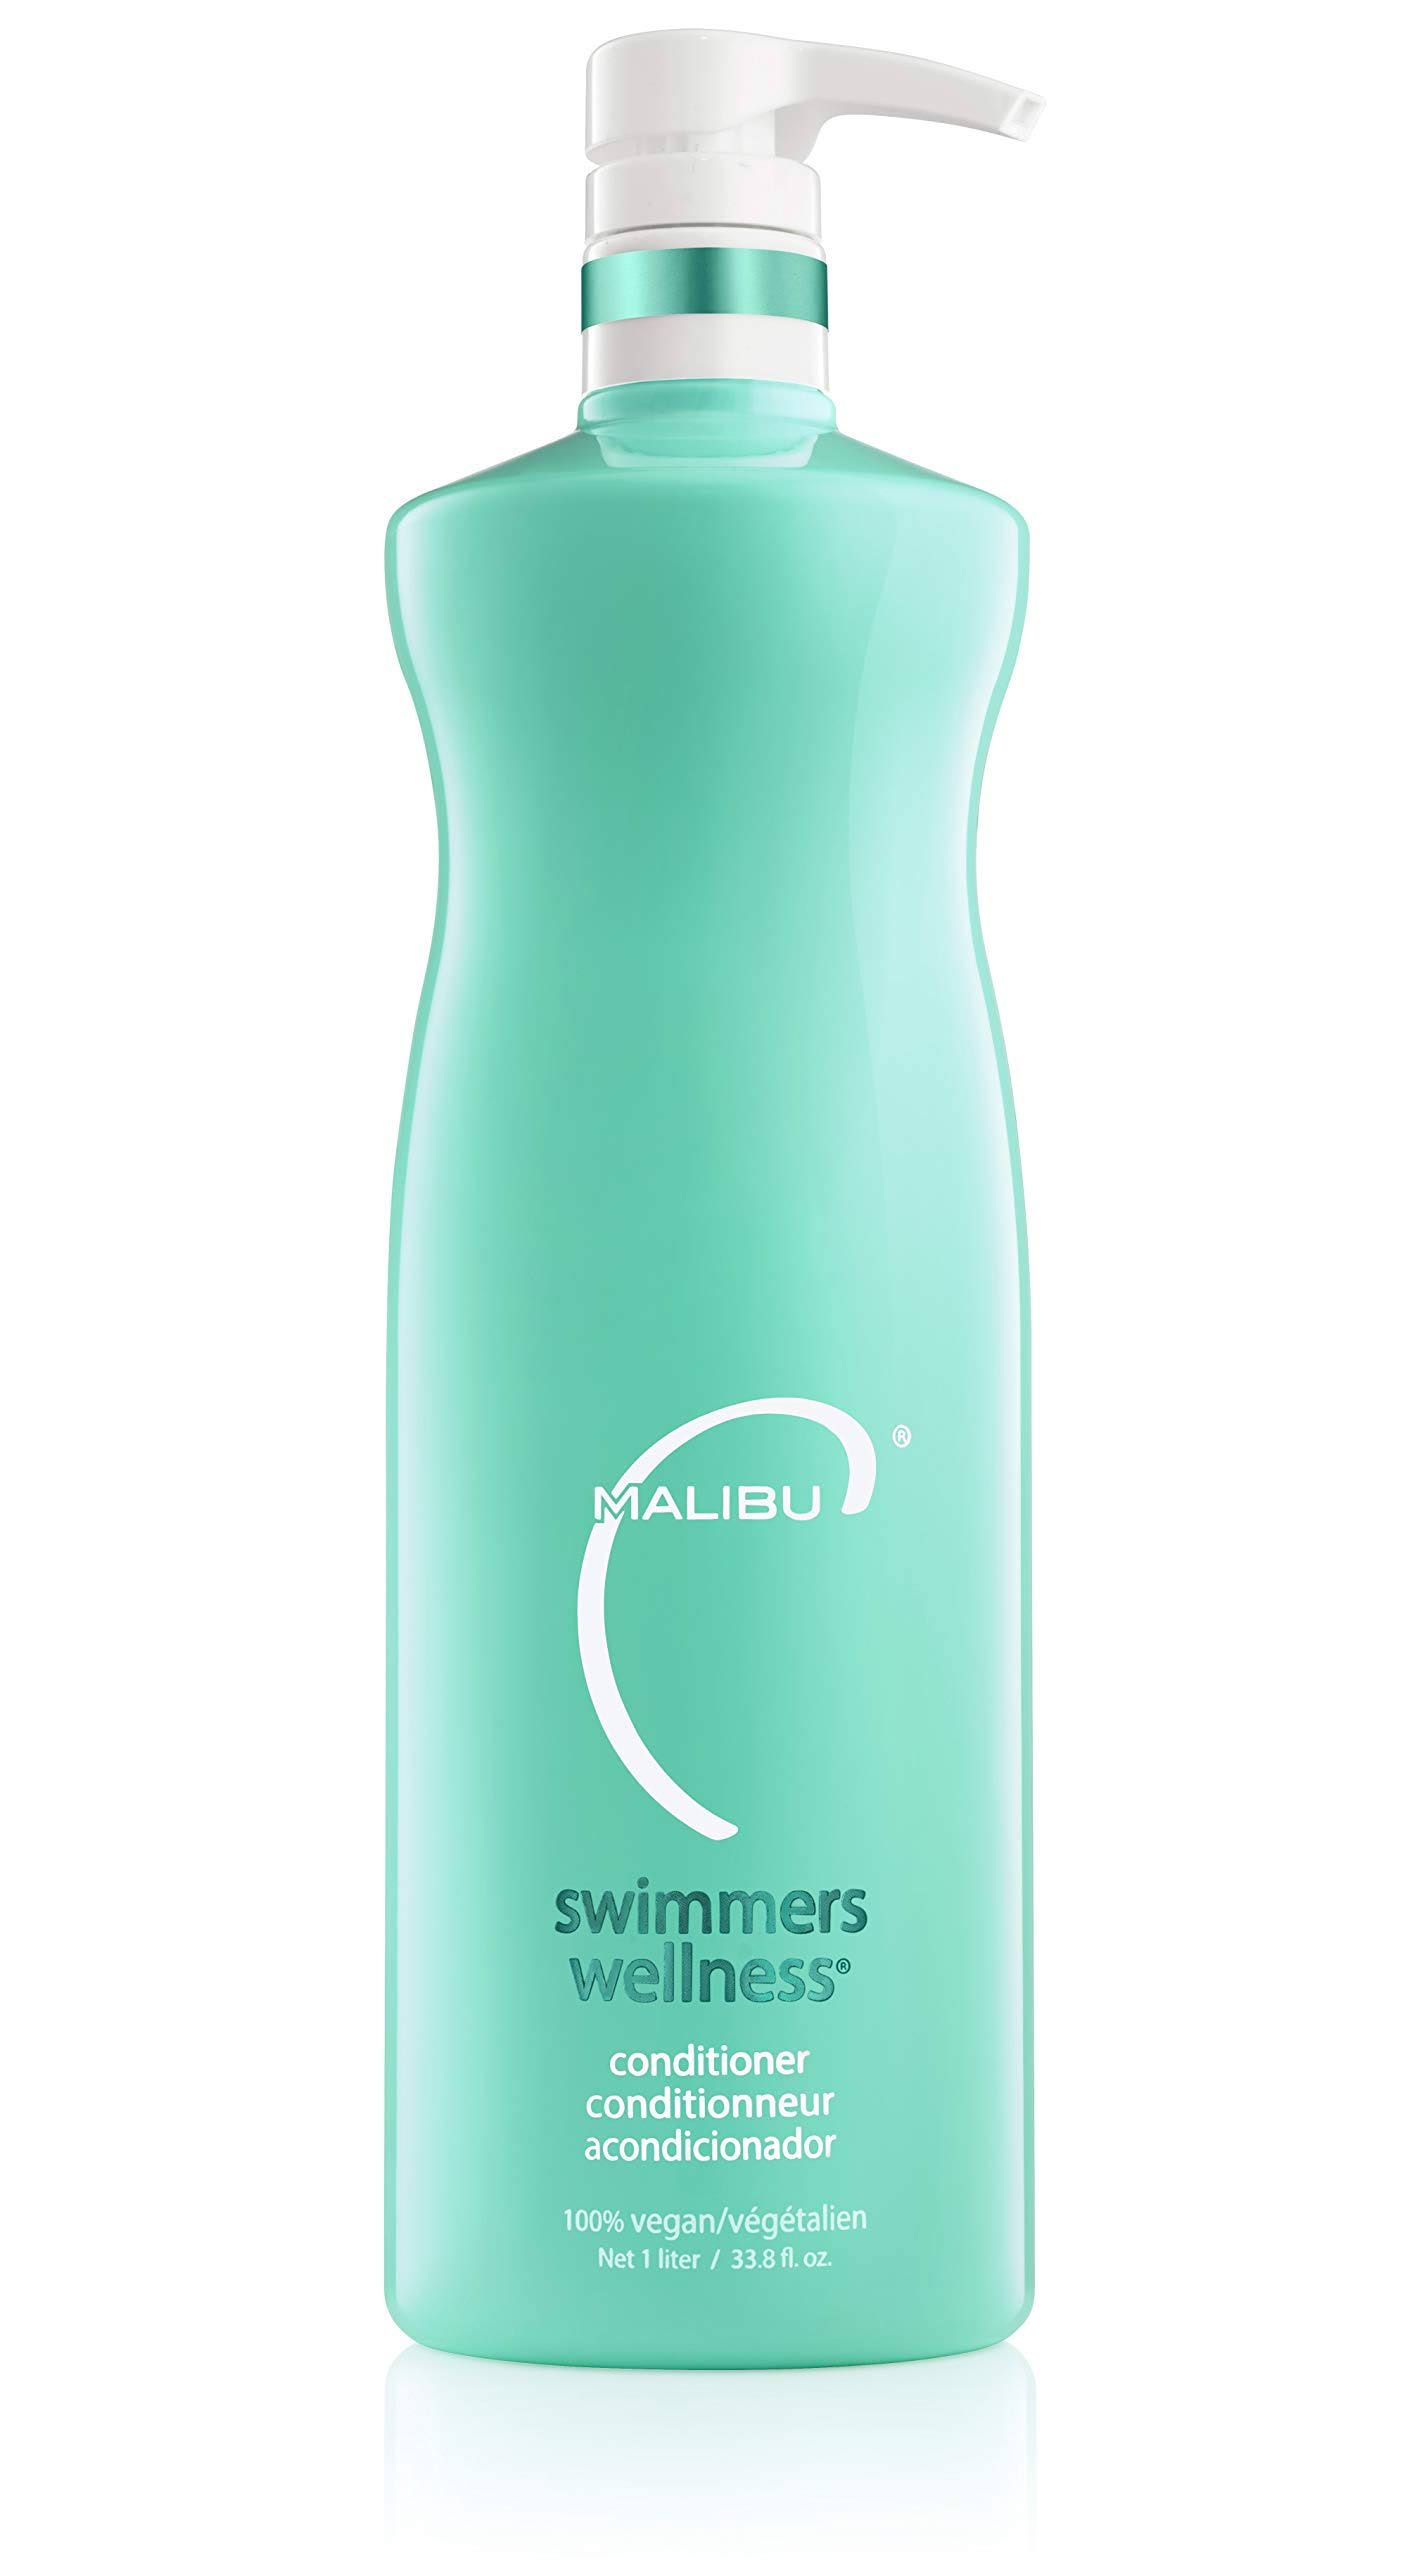 Malibu c swimmers wellness conditioner 33.8 oz